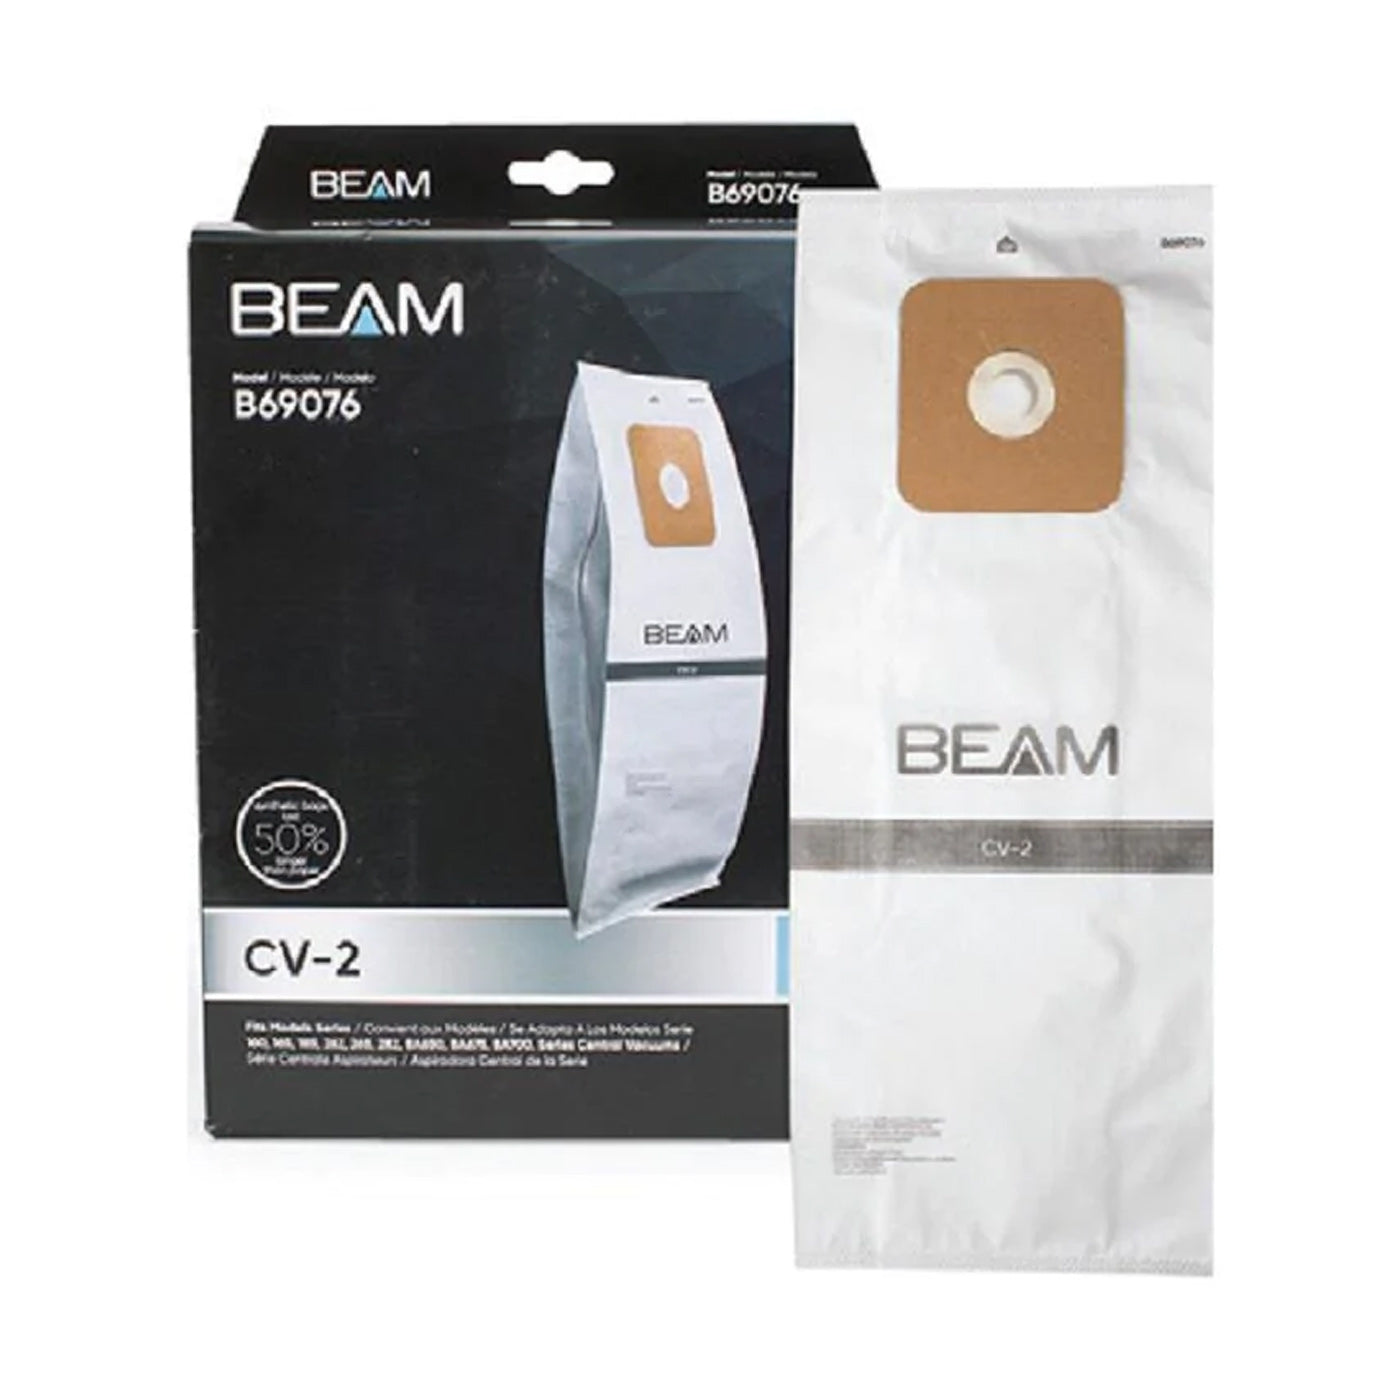 Beam / Electrolux CV-2 Synthetic bags (3 pcs)